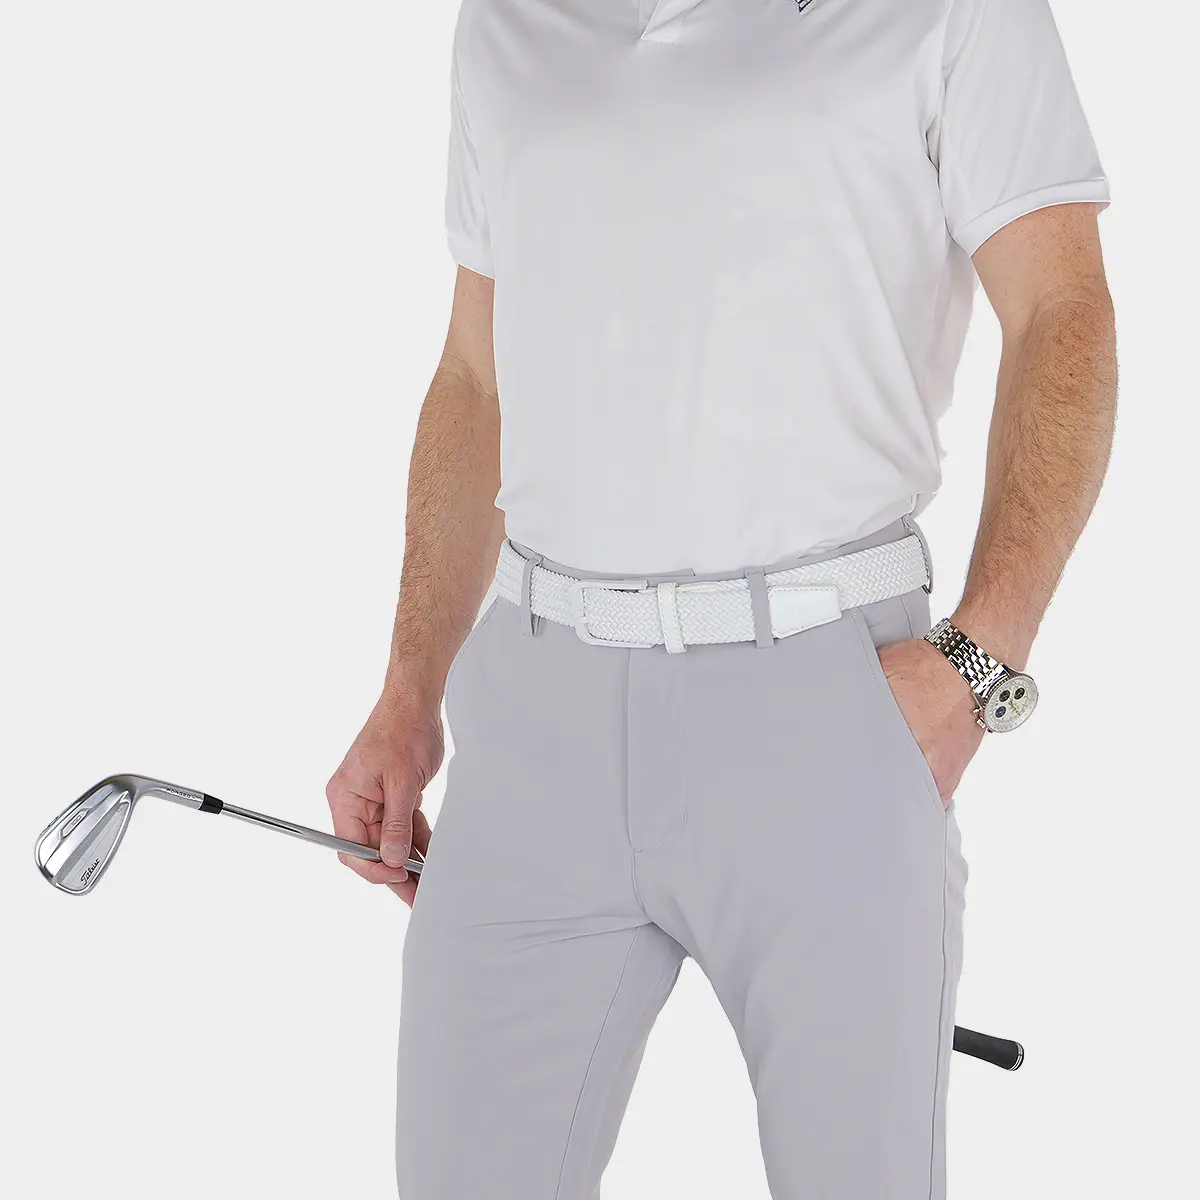 White Golf Belts - Closet Play Image